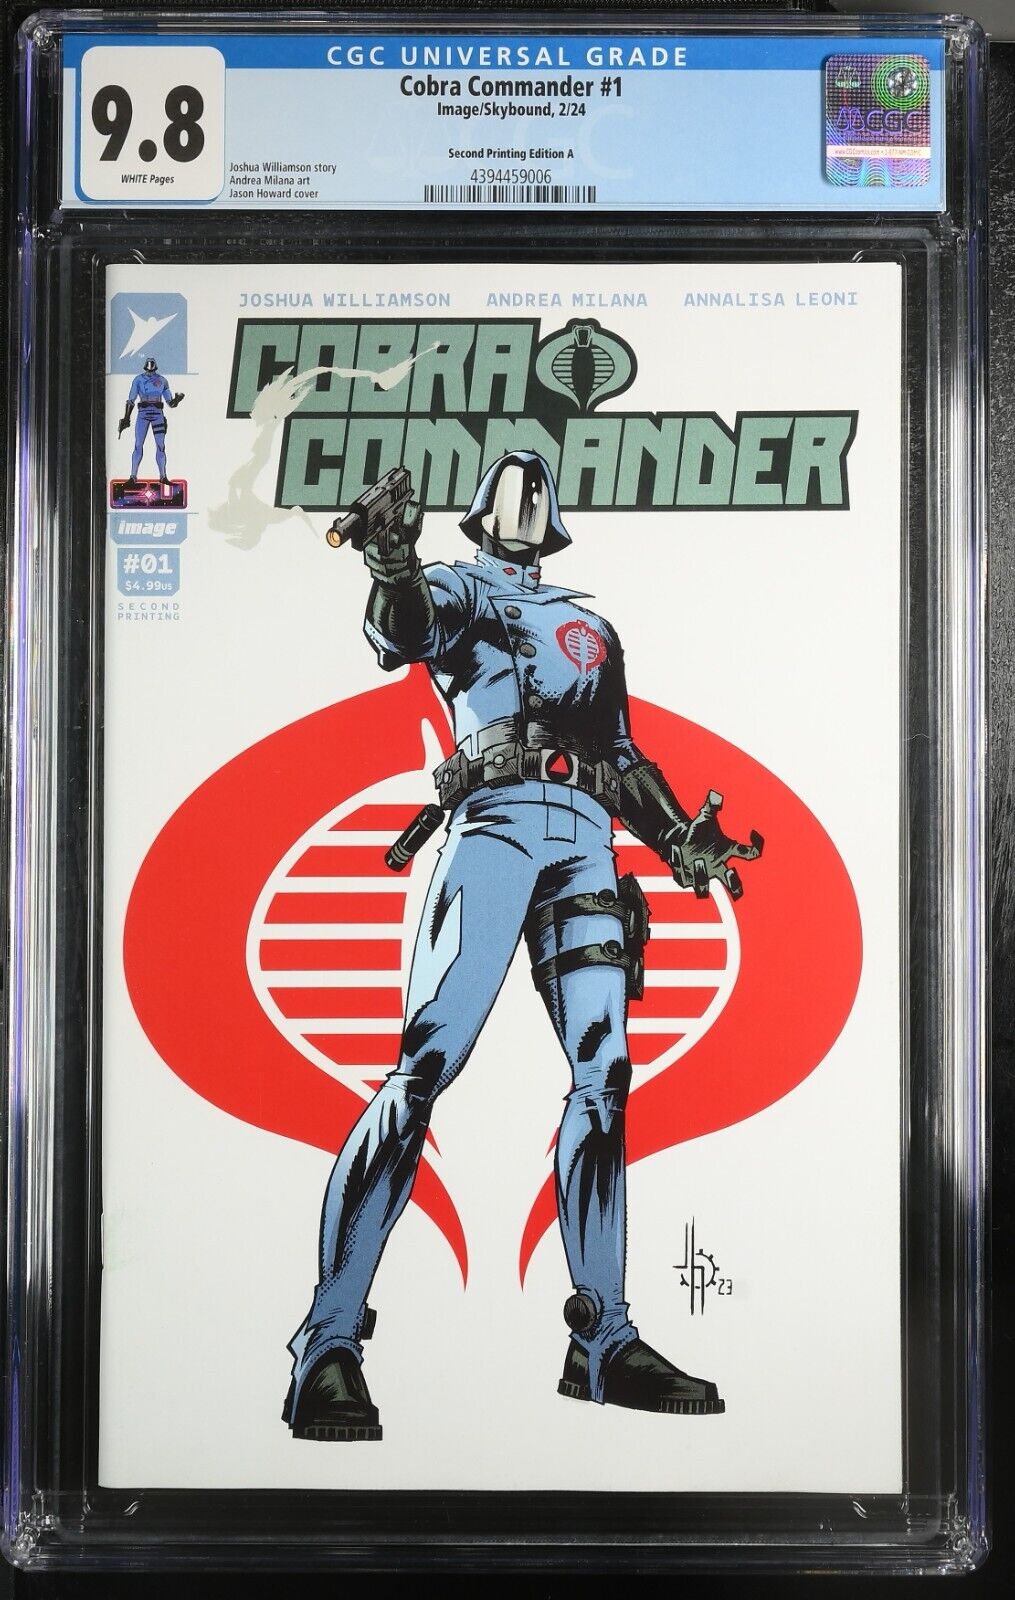 Cobra Commander #1 CGC 9.8 2nd Print Cover A Image 2024 Transformers GI Joe WP